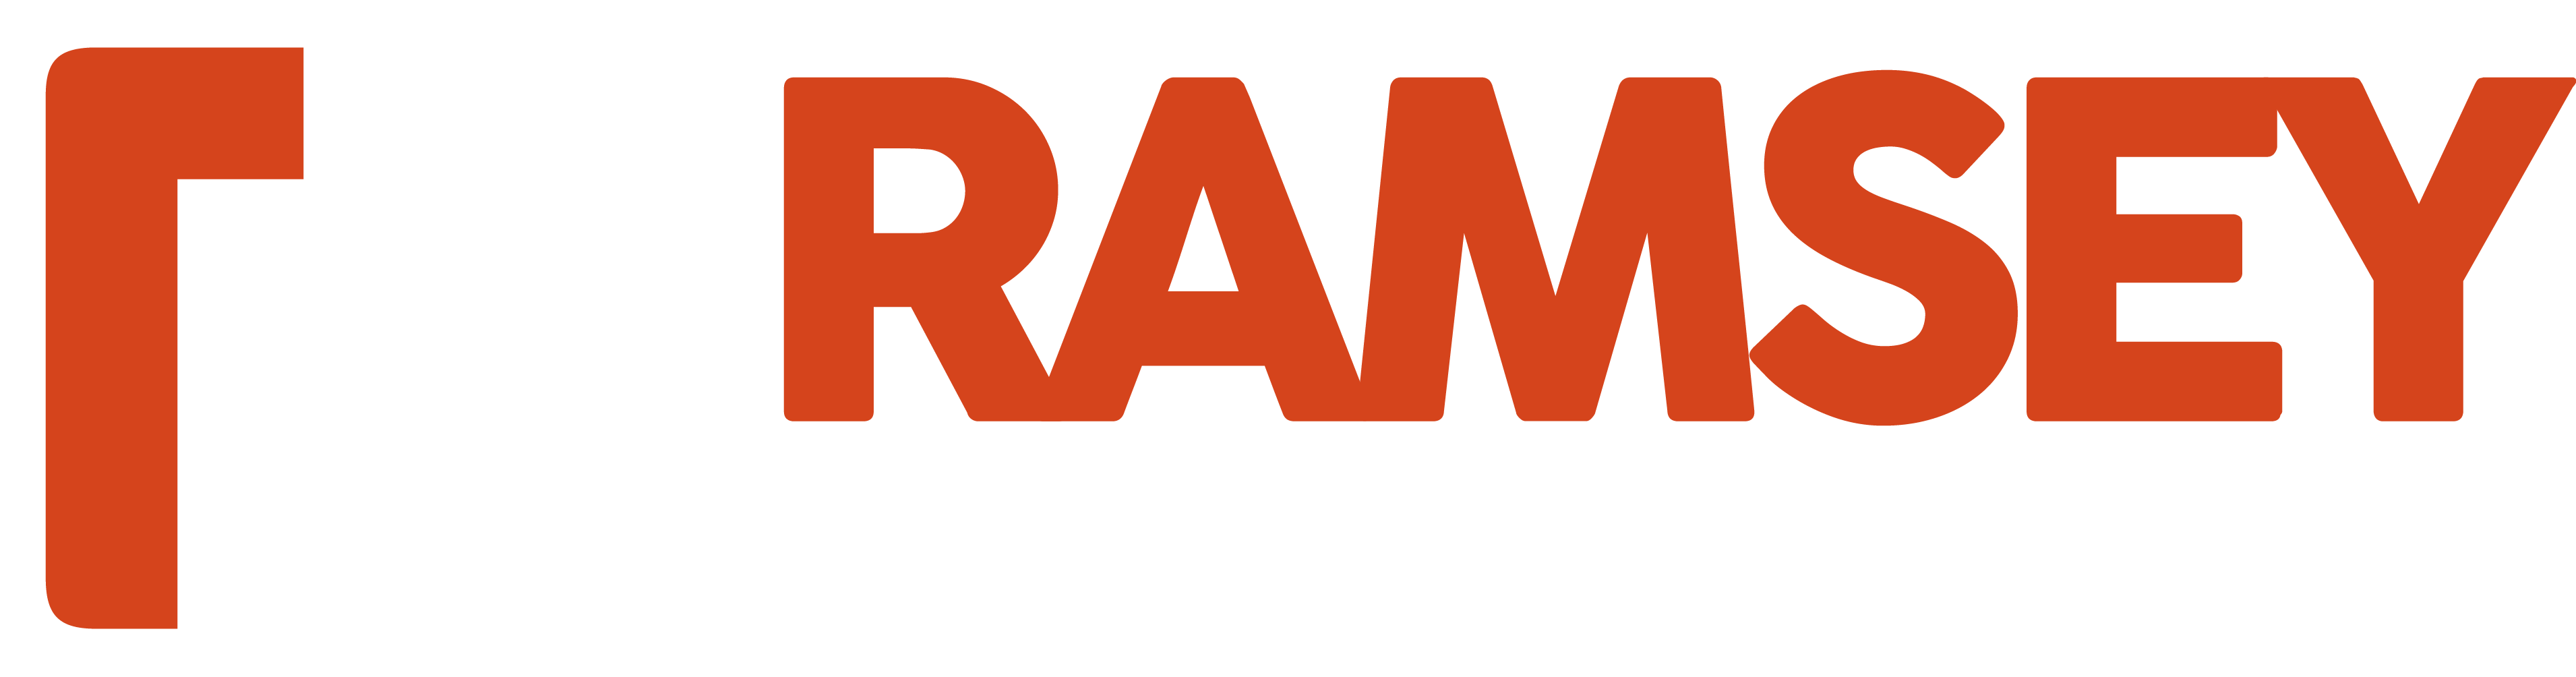 Ramsey Mediaworks logo